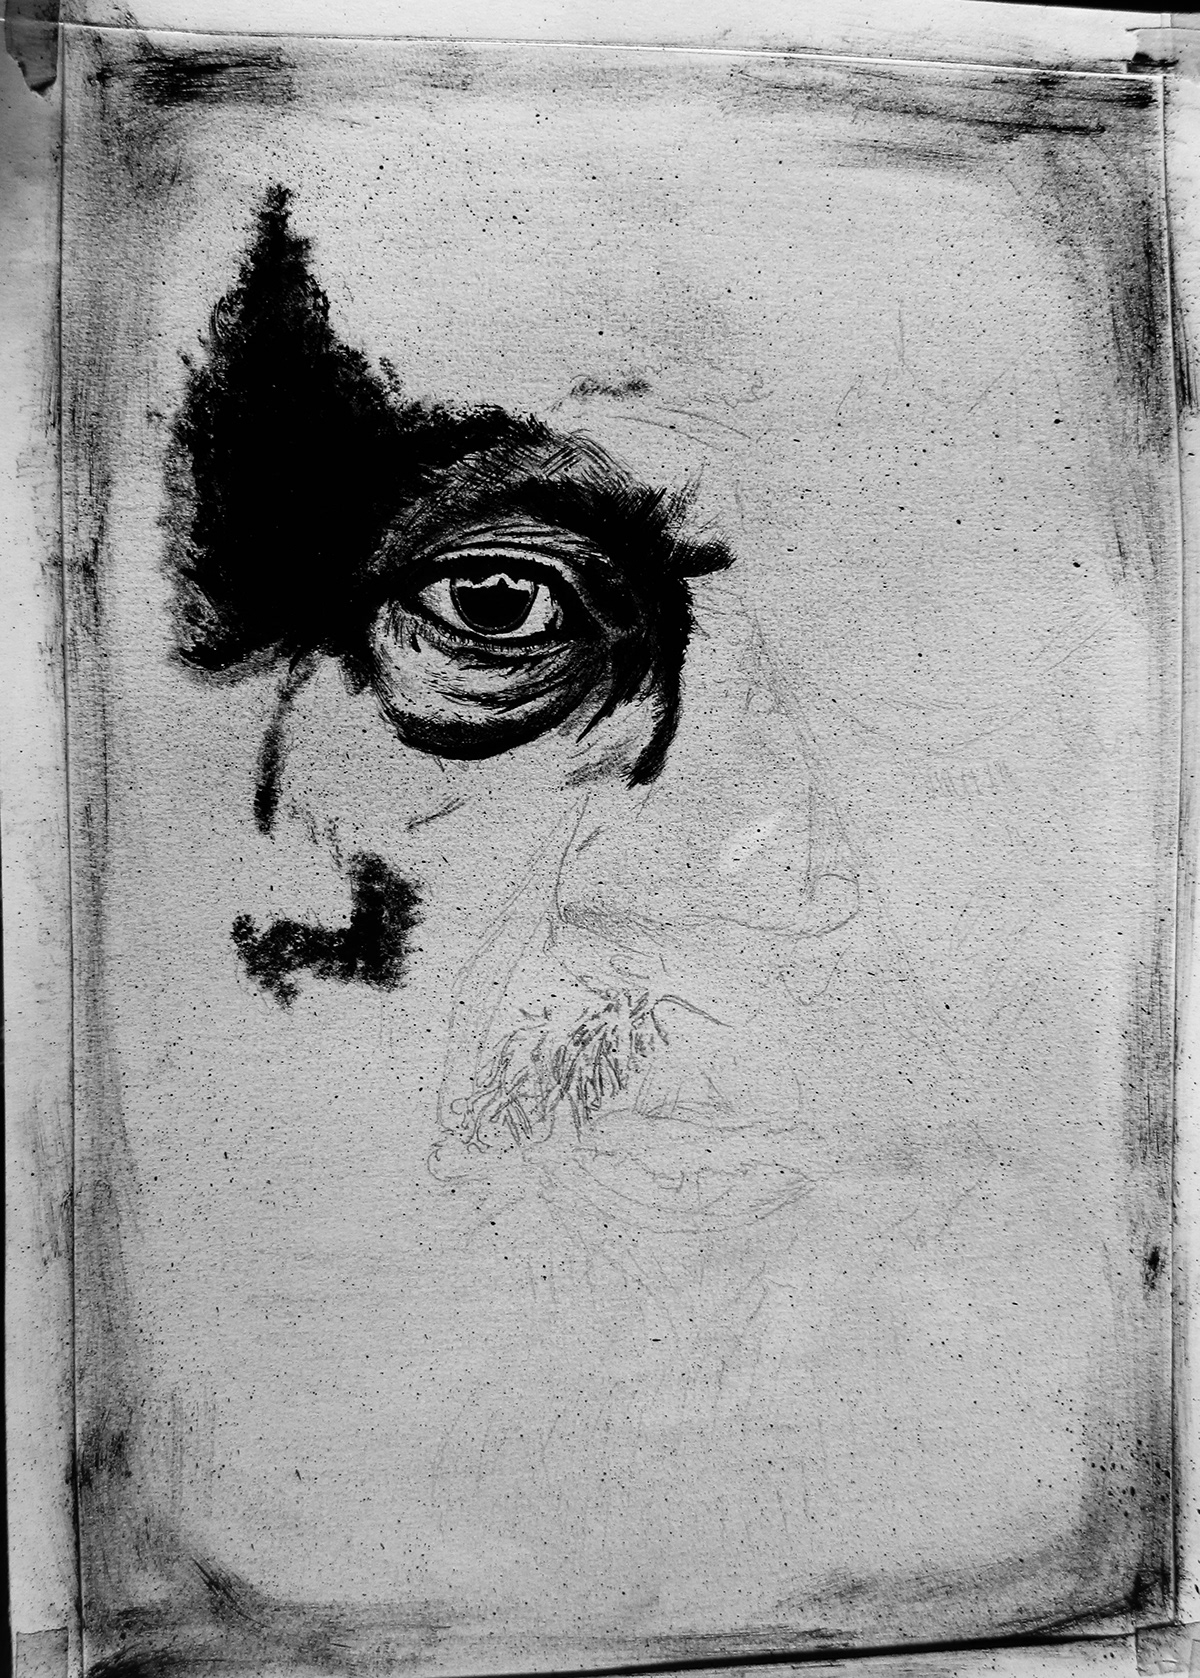 viejo pirata parche ojo dibujo negro pincel seco pincel tinta china estilografo lapiz salpicadura grunge cepillo